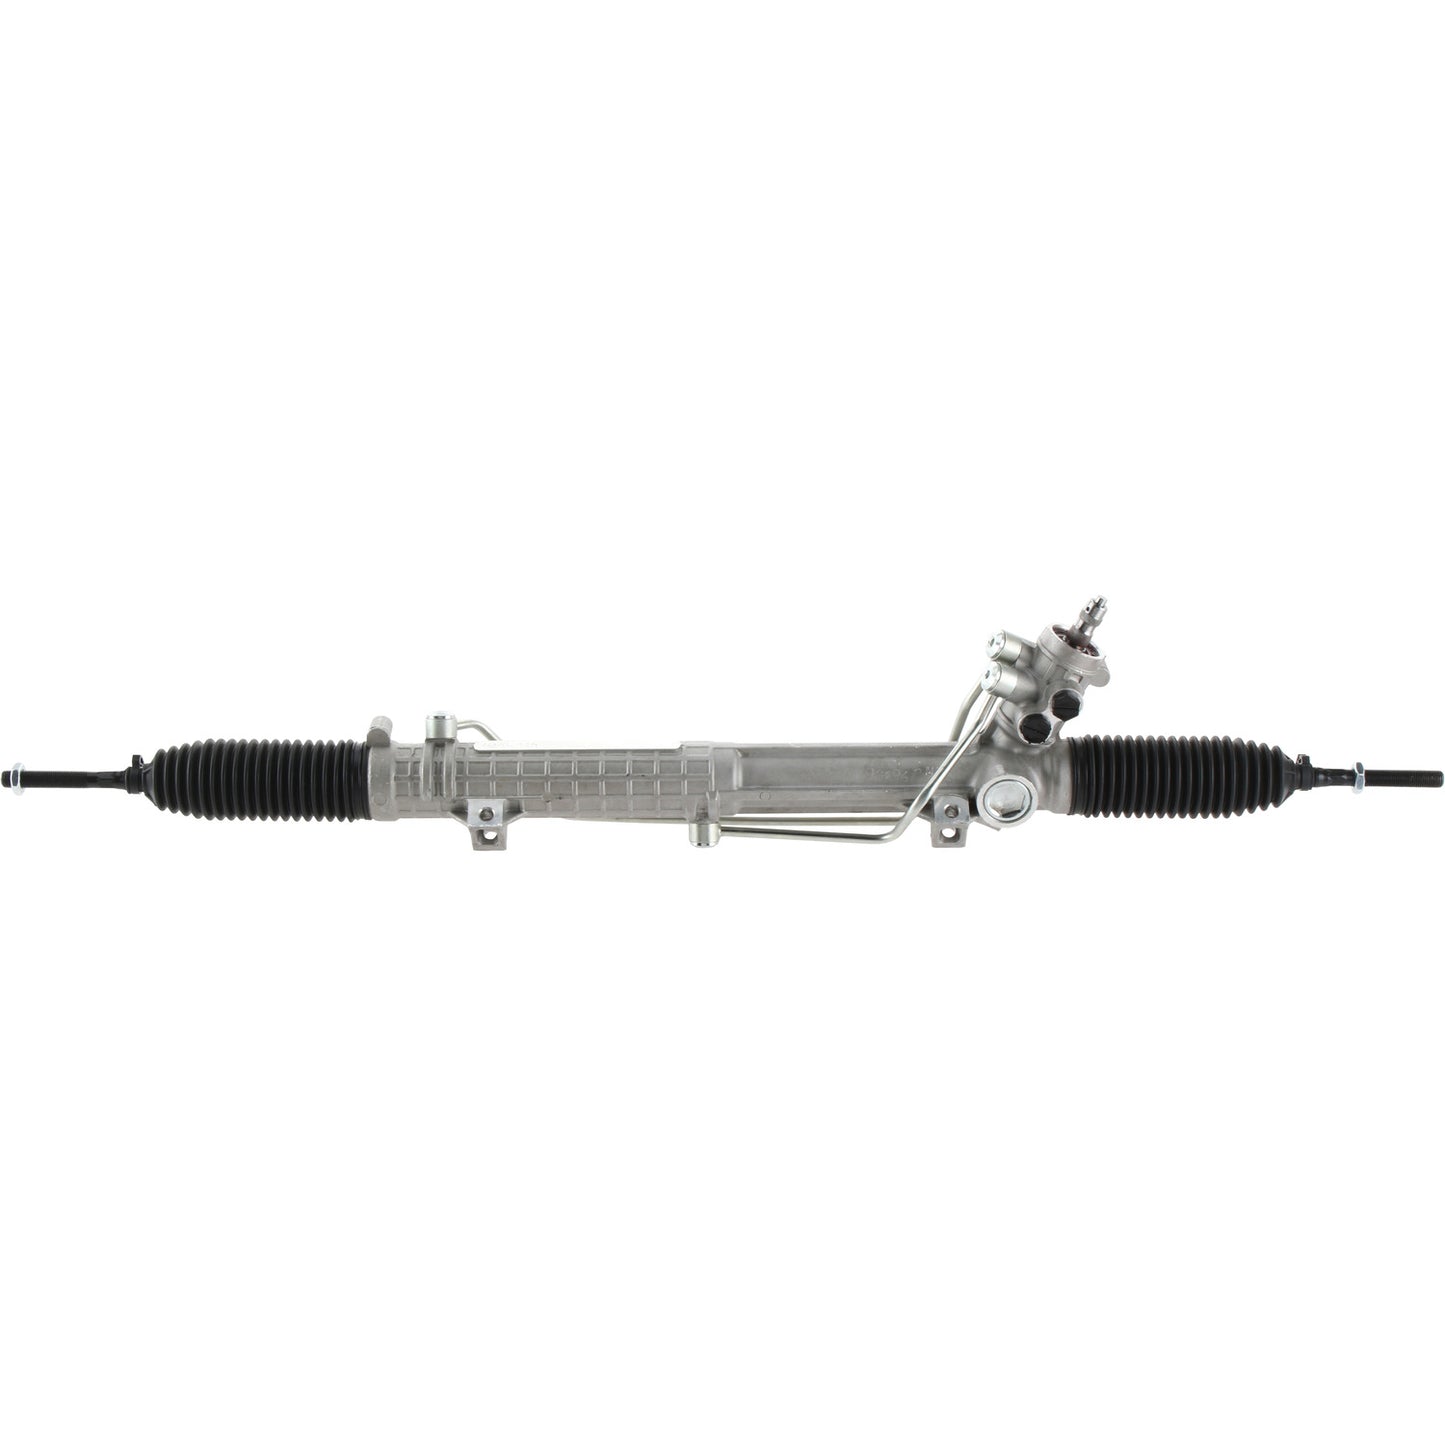 Rack and Pinion Assembly - Marathon HP - Hydraulic Power - New - 93296MN